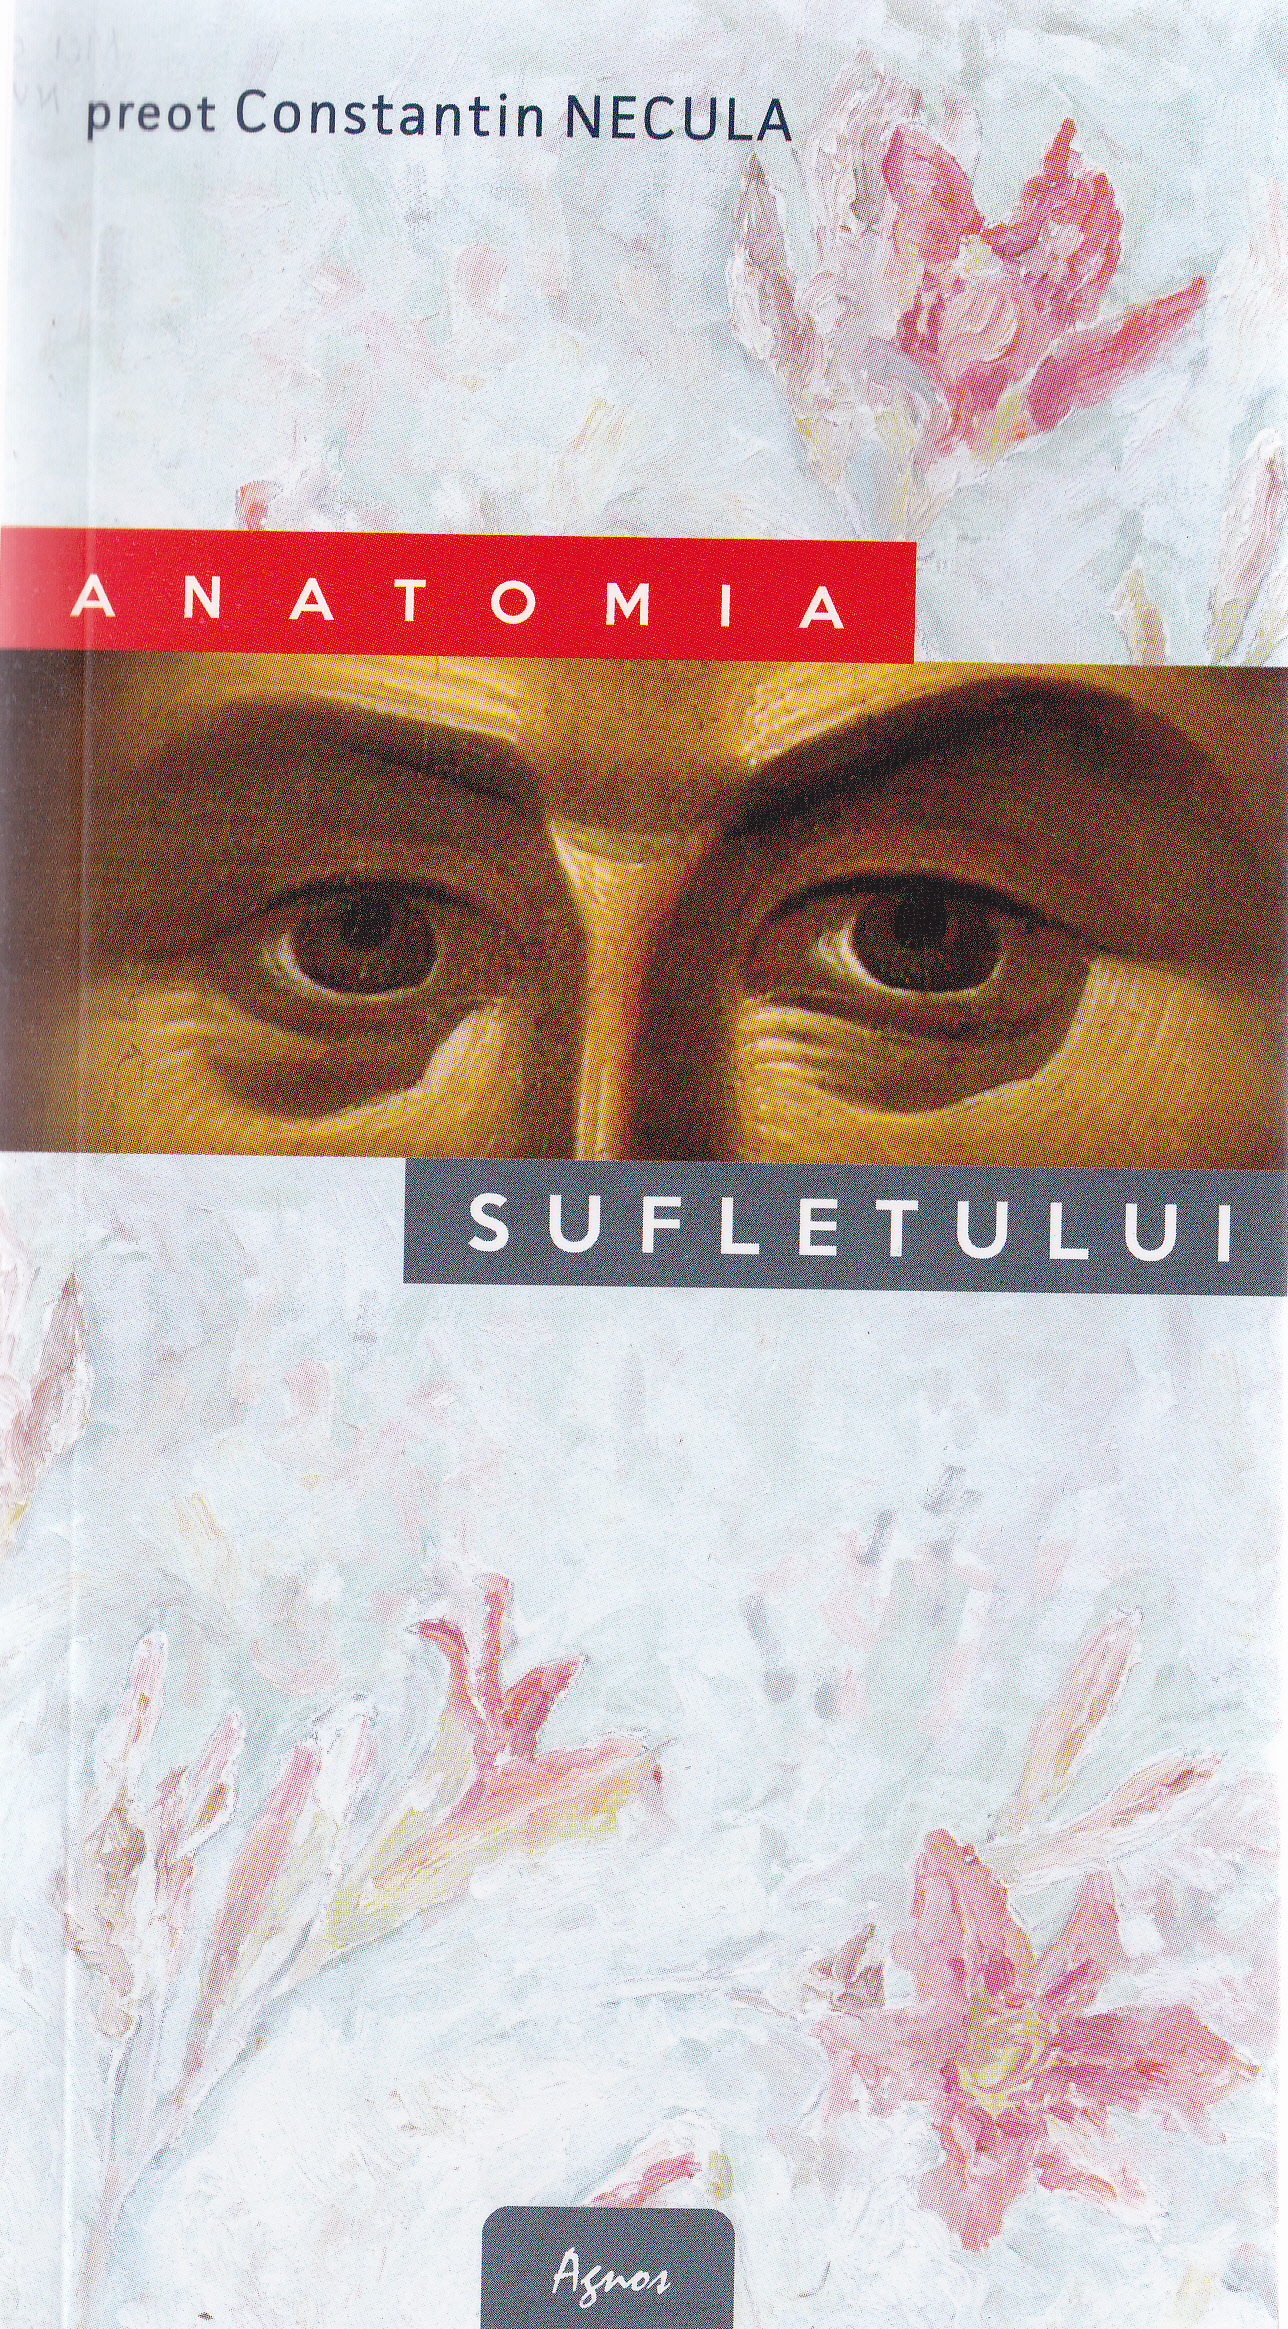 Anatomia sufletului - Constantin Necula